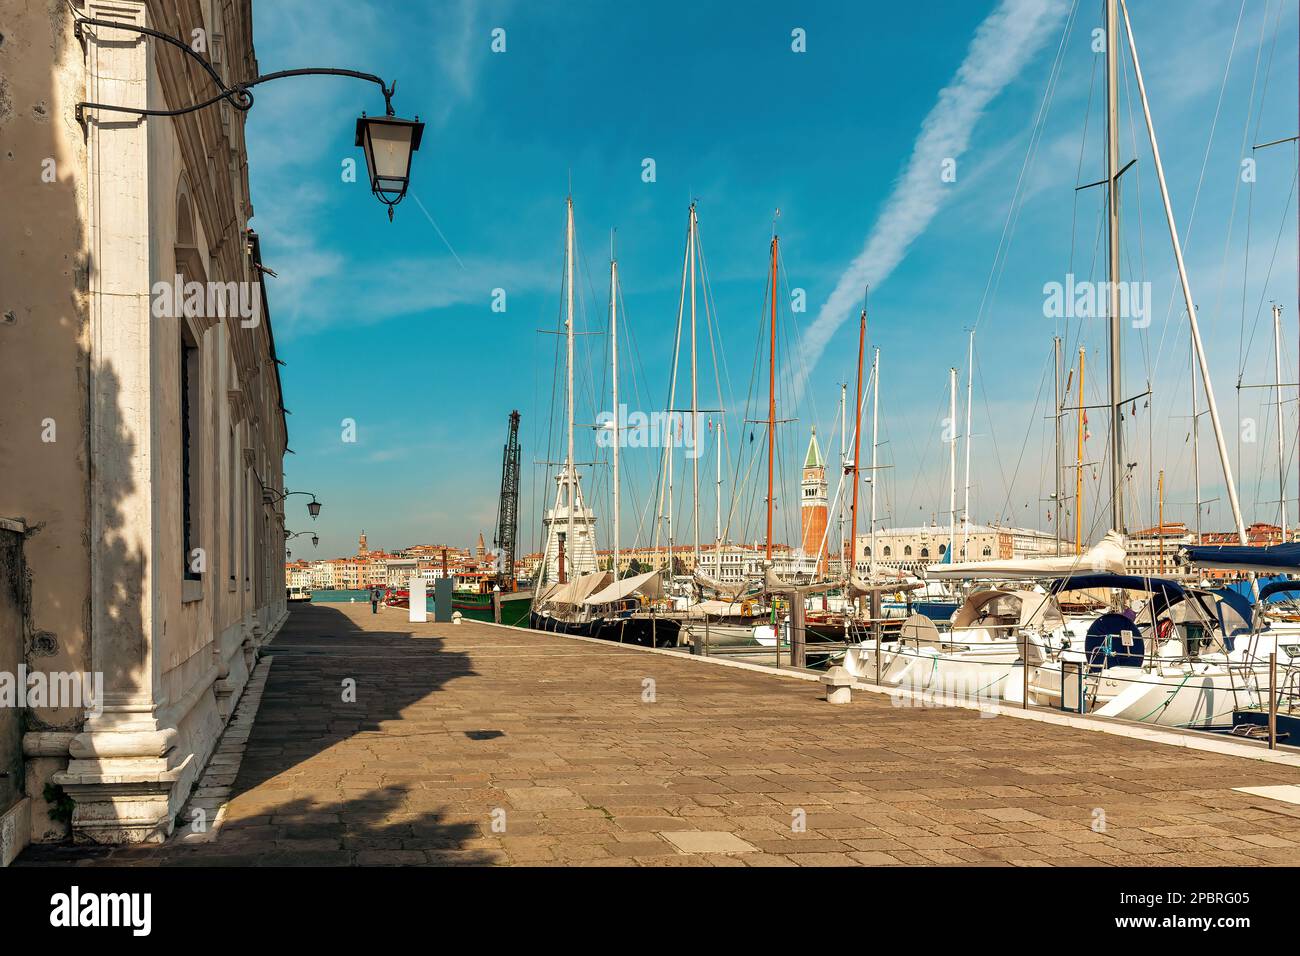 View of promenade along small marina with yachts on San Giorgio Maggiore island in Venice, Italy. Stock Photo